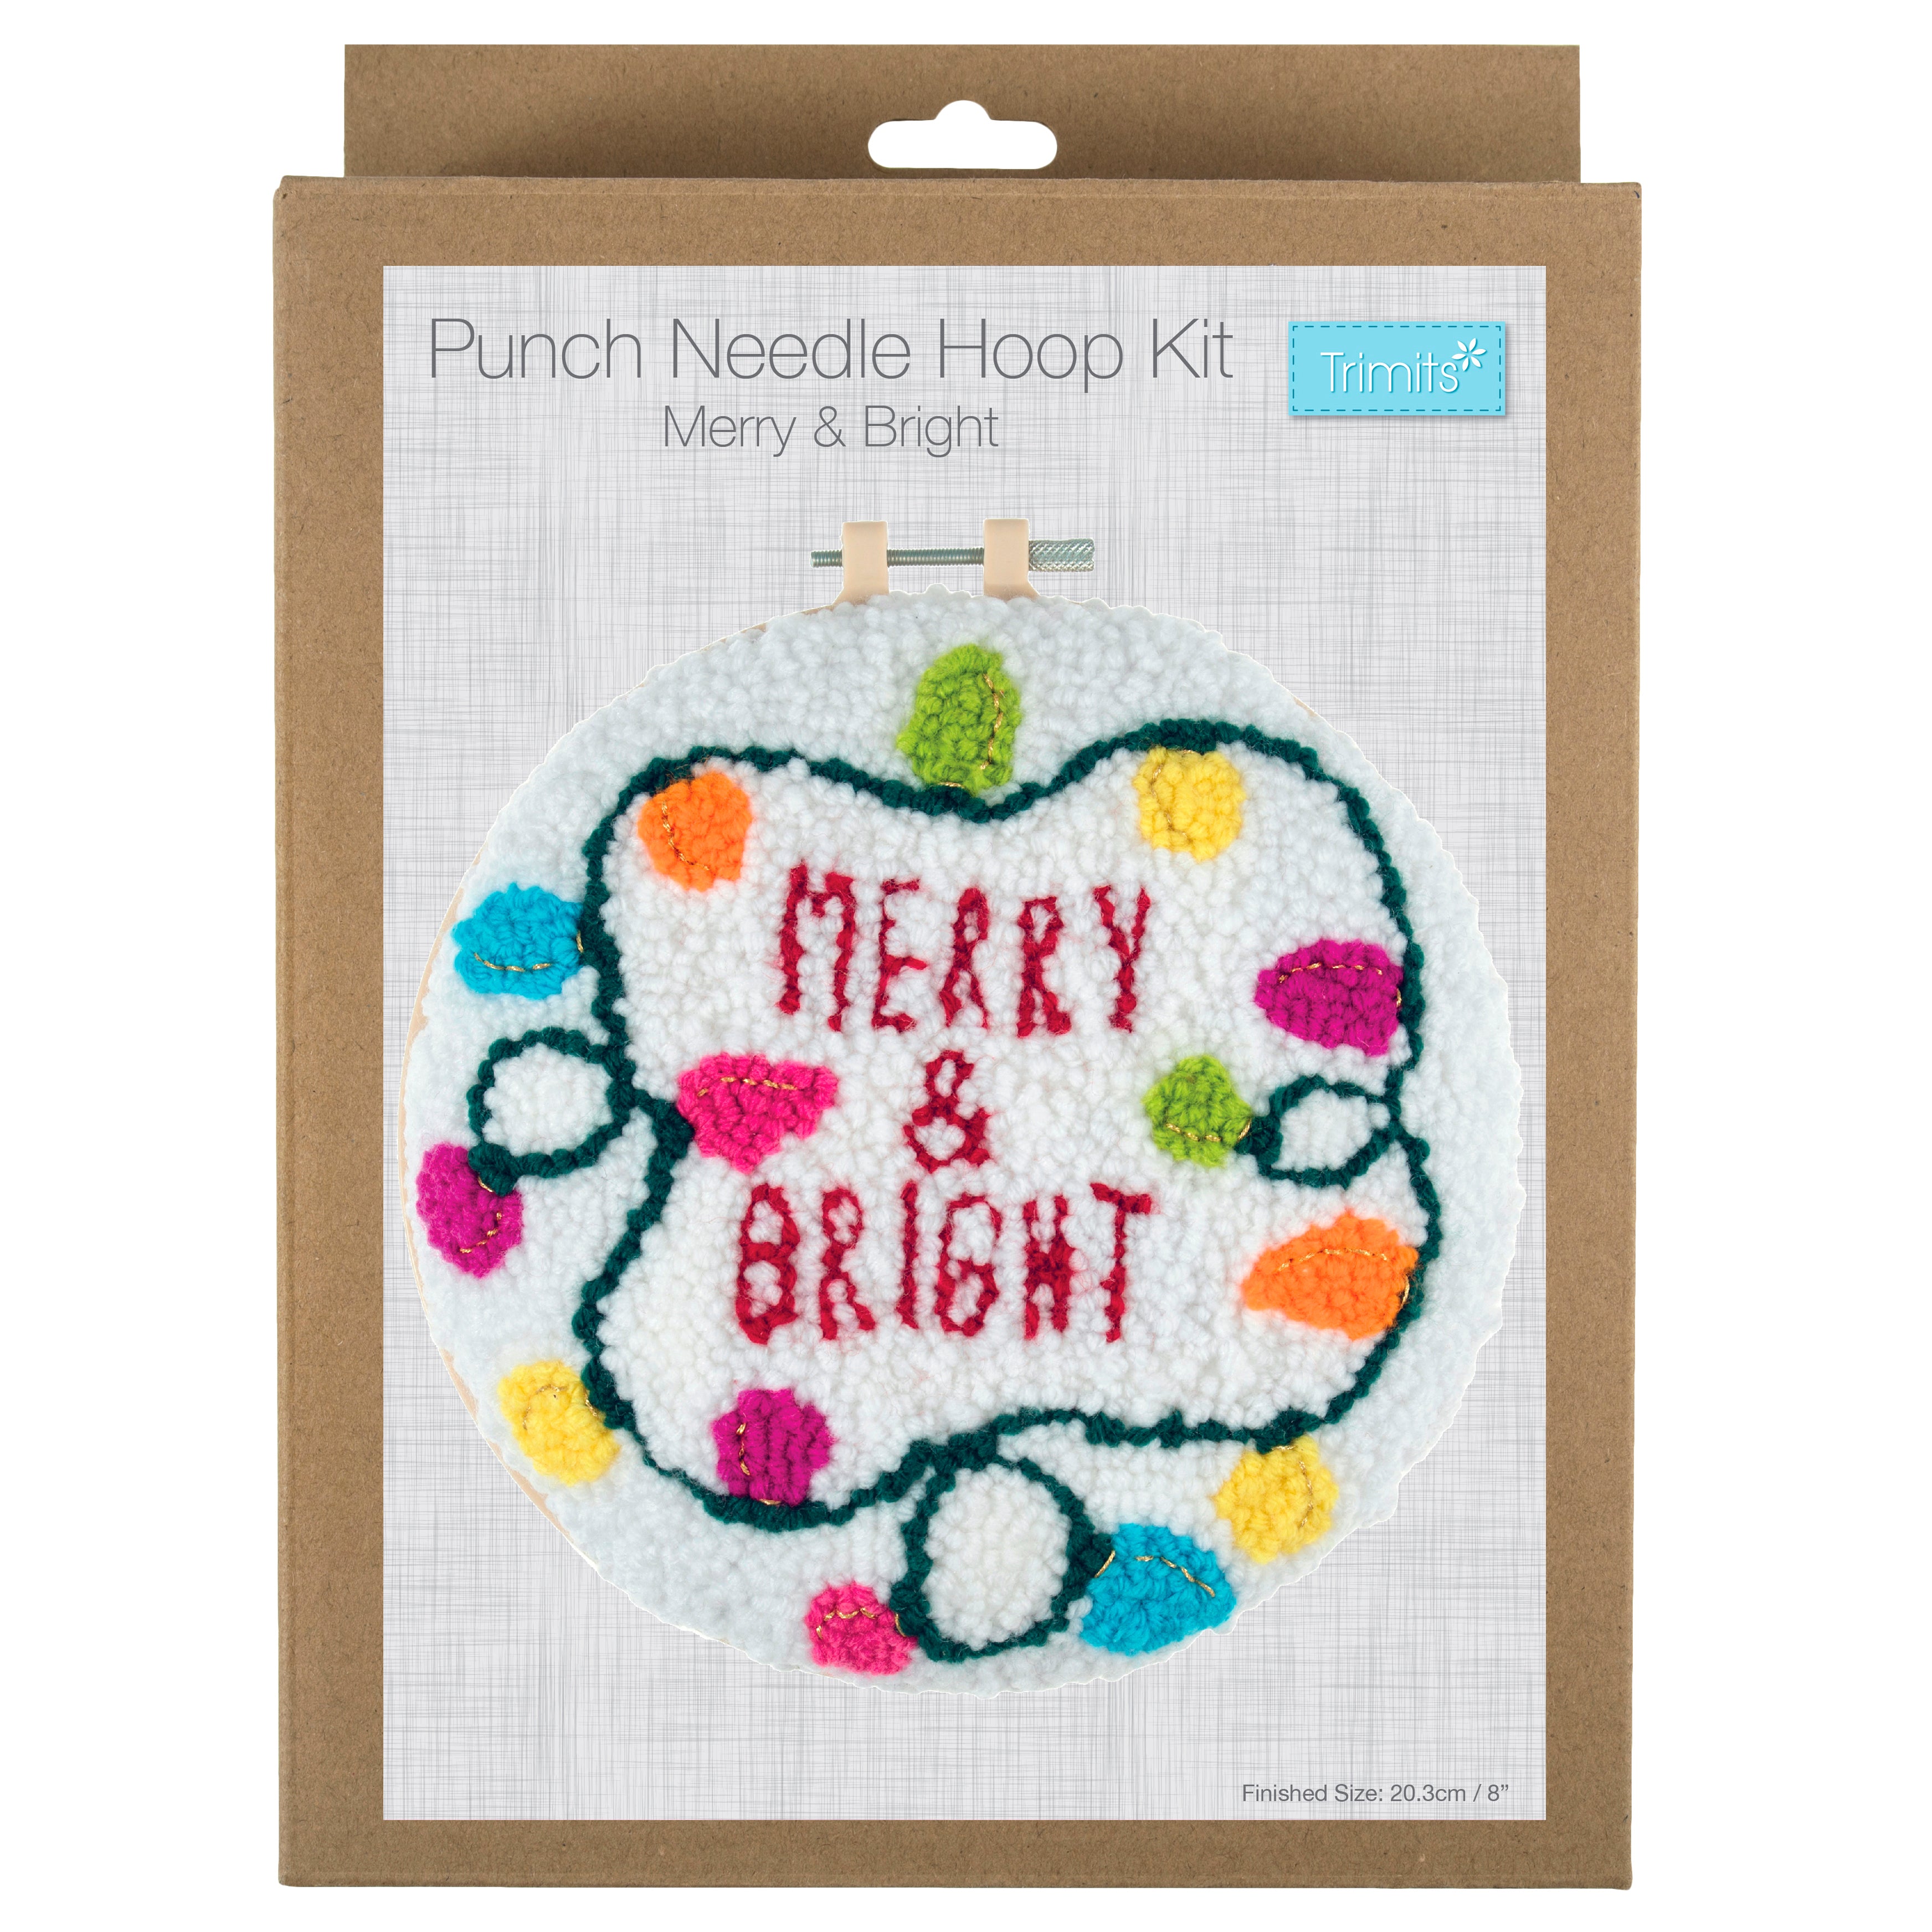 Trimits Punch Needle Yarn & Hoop Kit: Merry & Bright